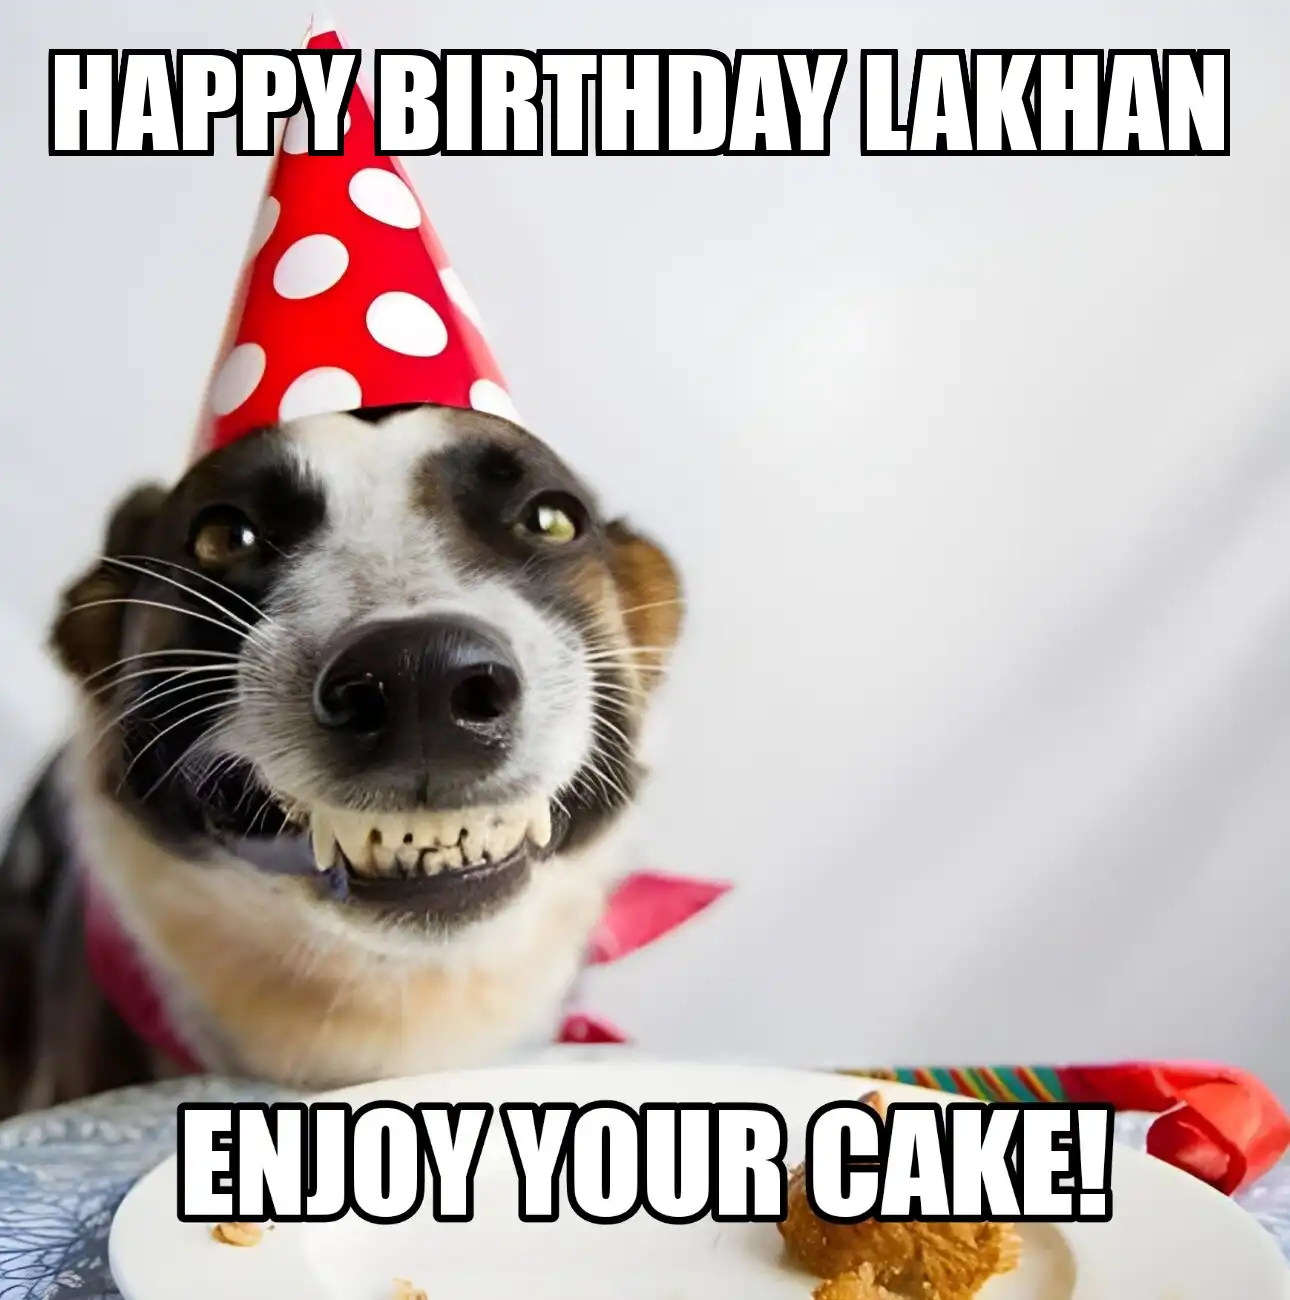 Happy Birthday Lakhan Enjoy Your Cake Dog Meme